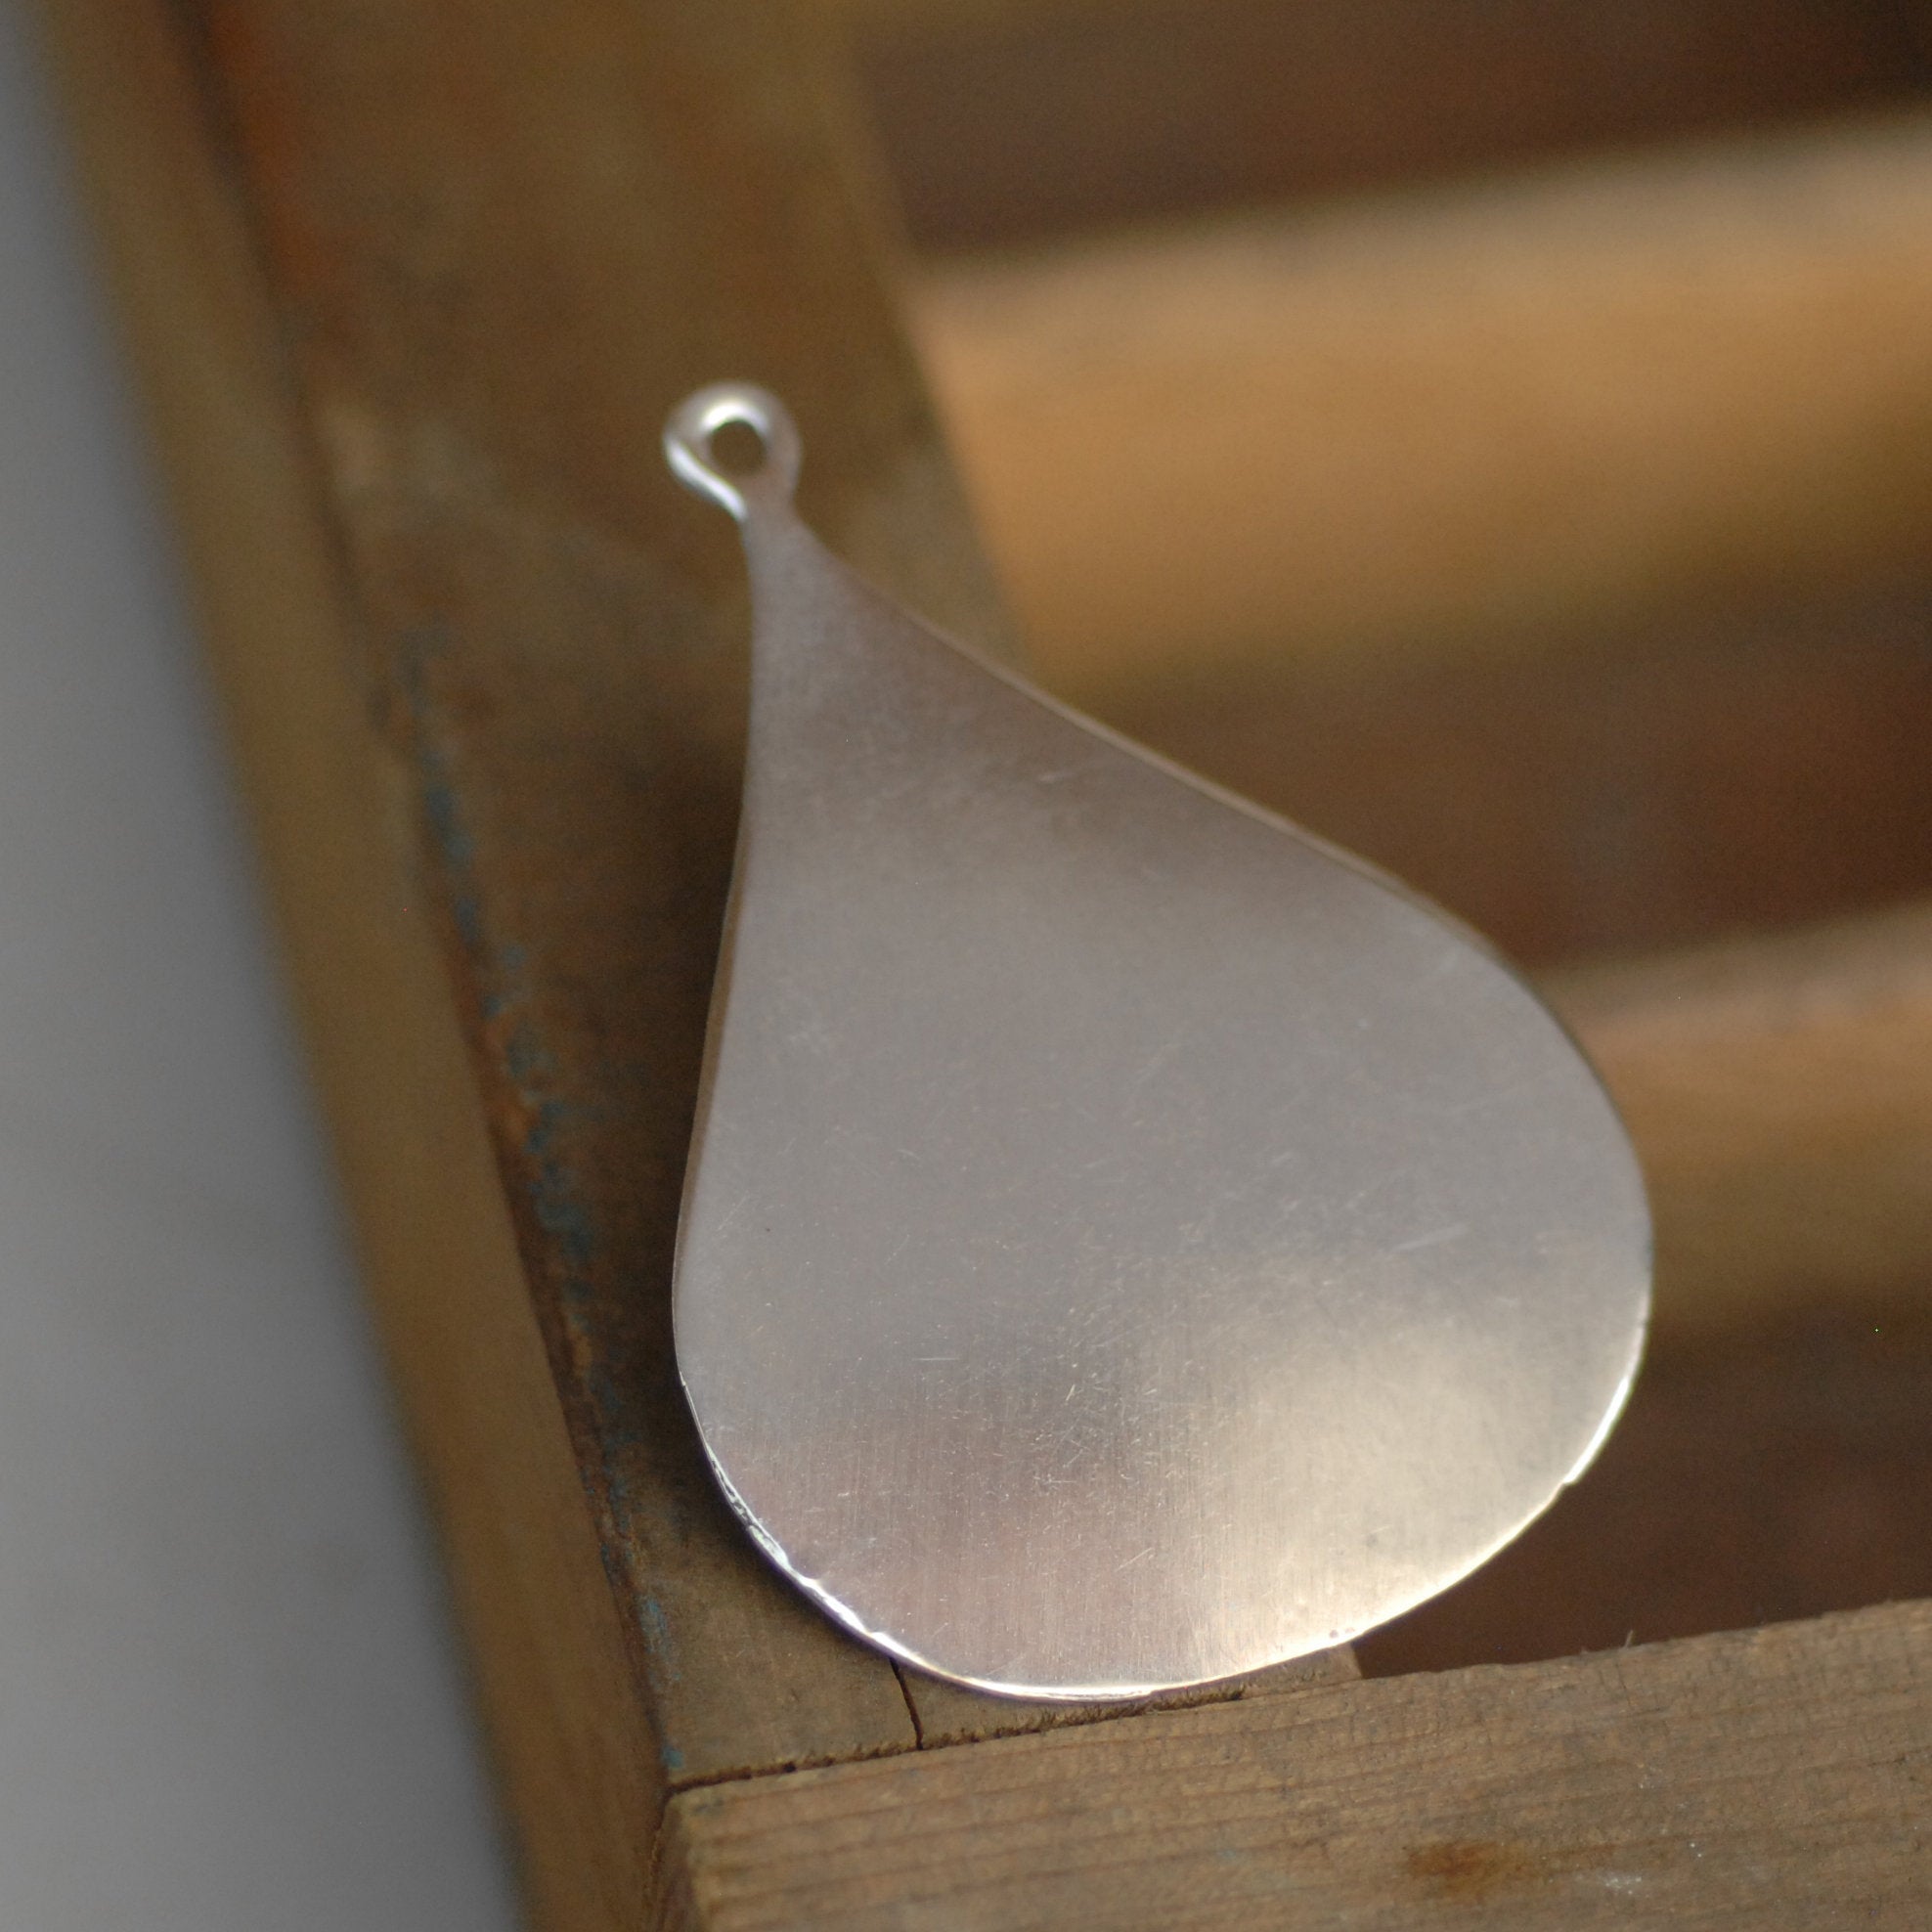 Sterling Silver Large Teardrop Blanks for Pendants or Earrings